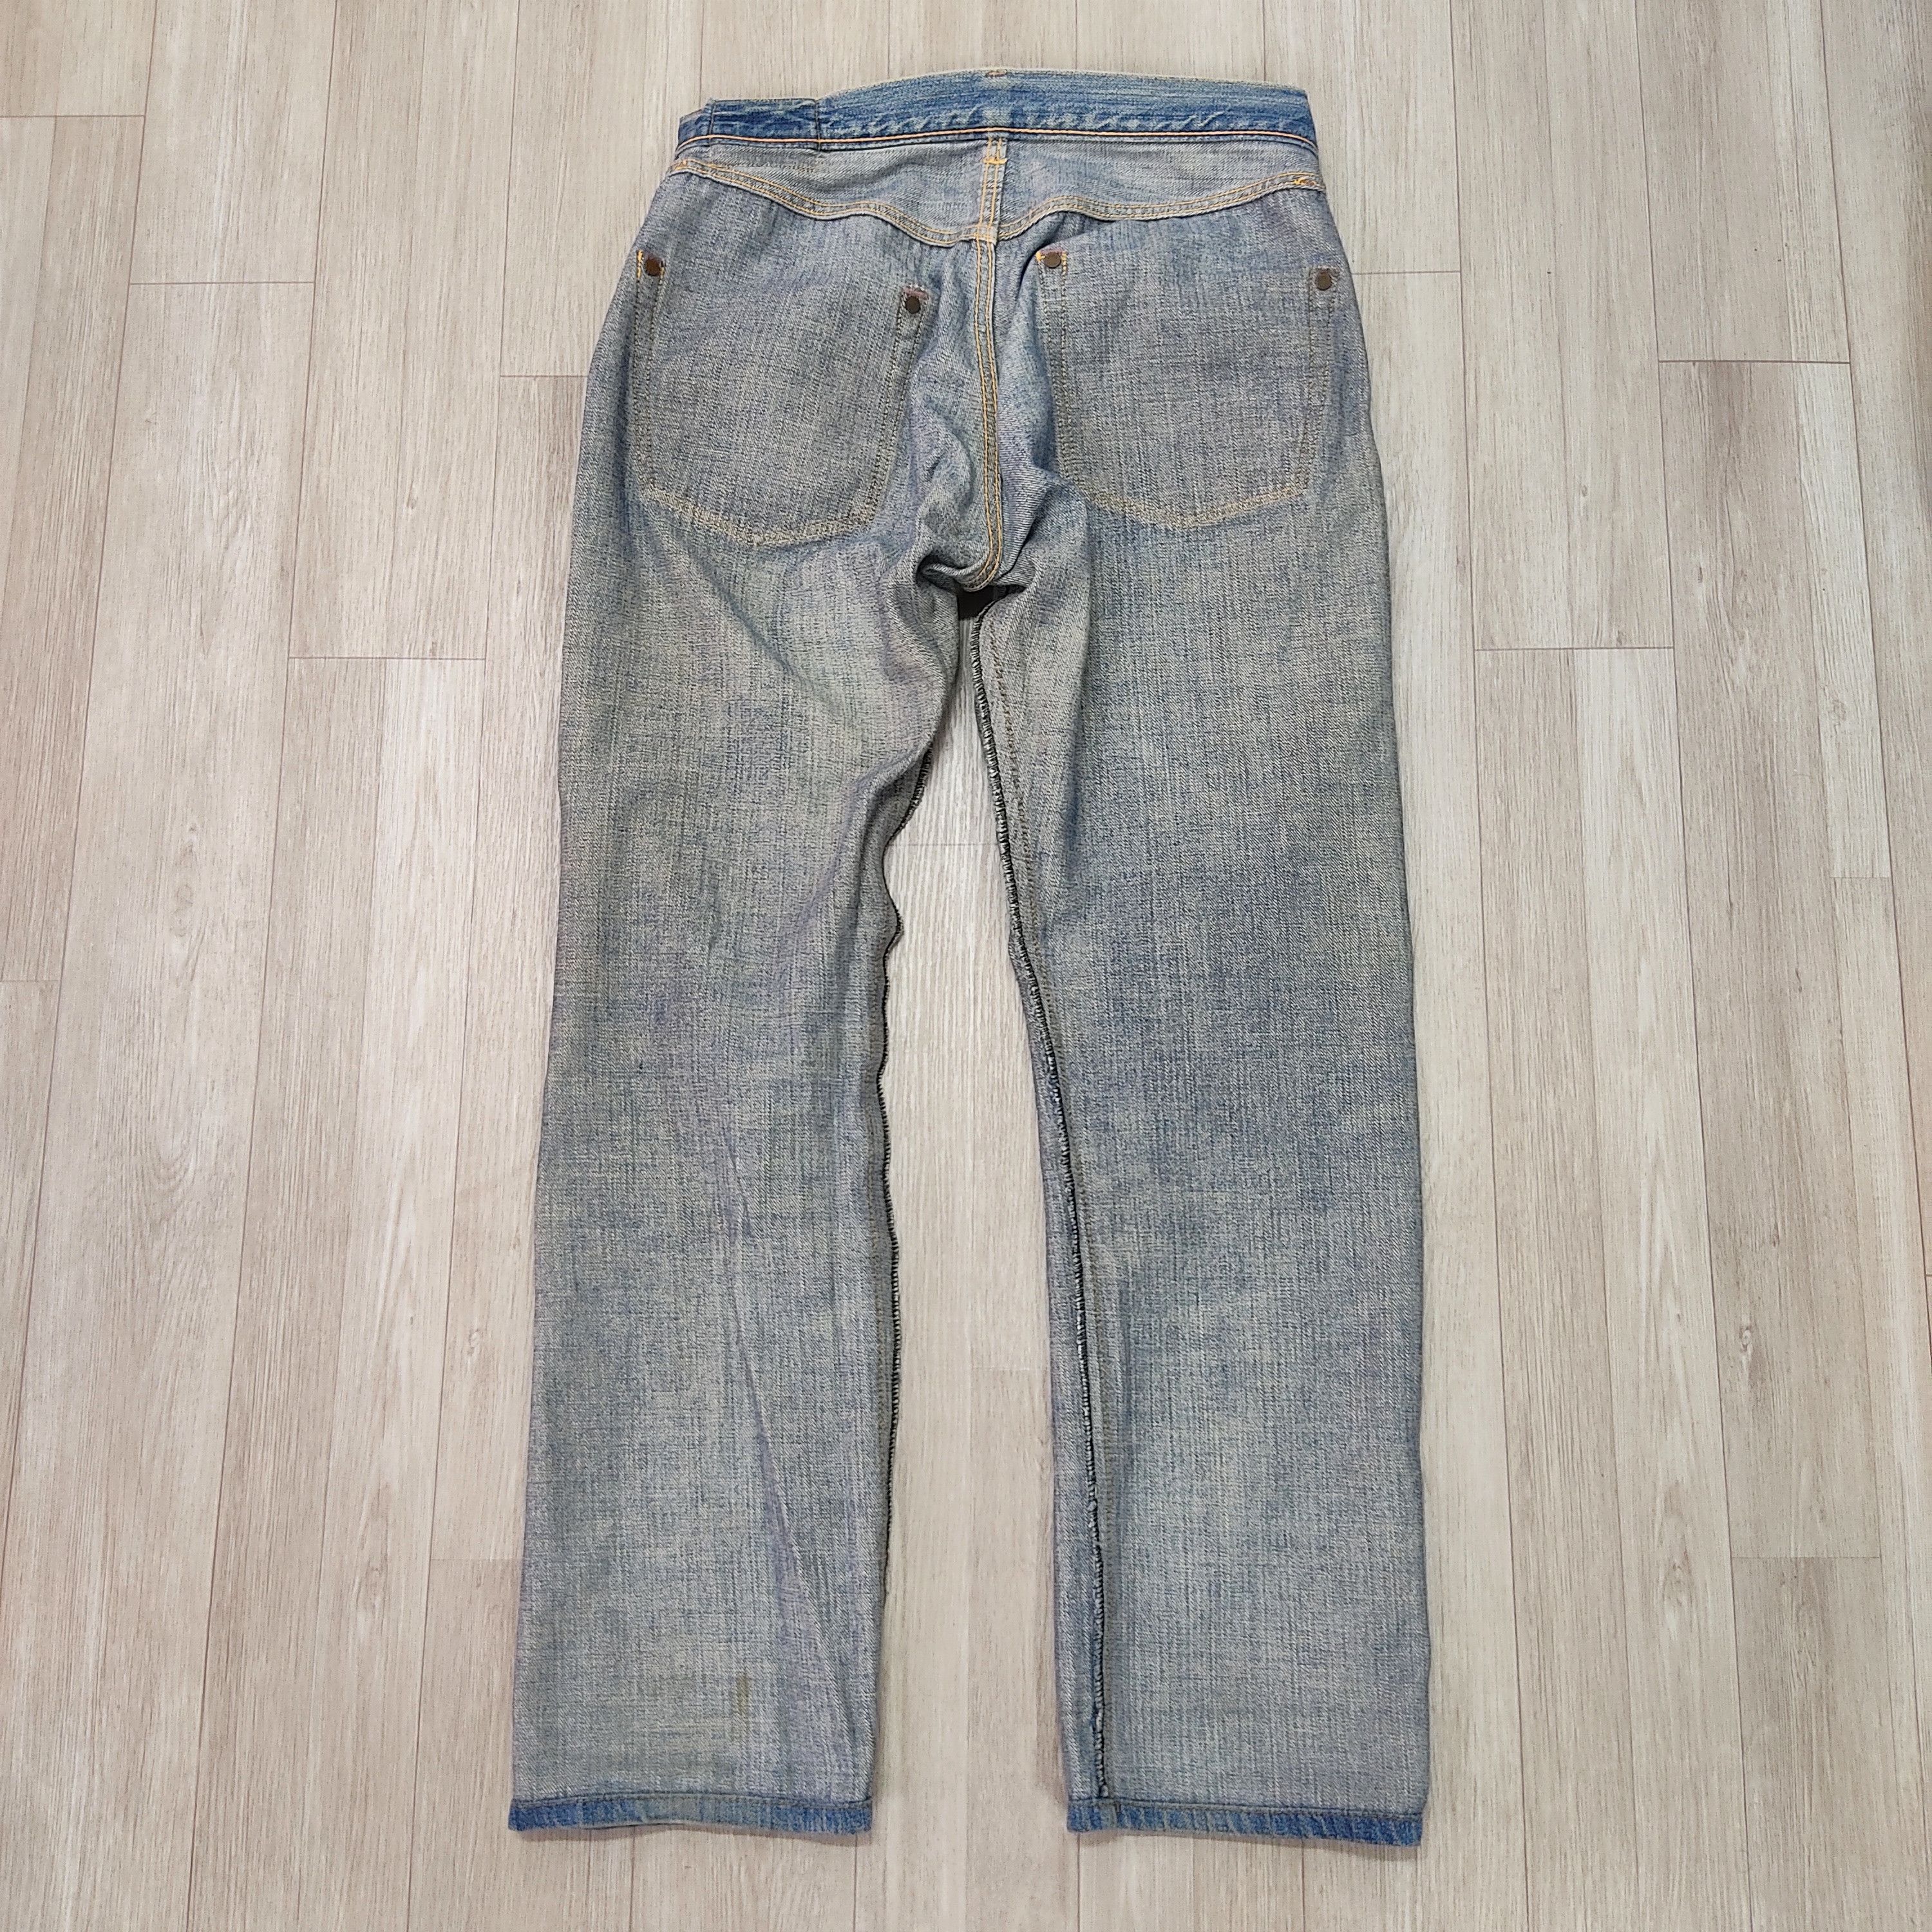 Vintage Cloze Jeans Japanese Selvedge Denim Pants - 16